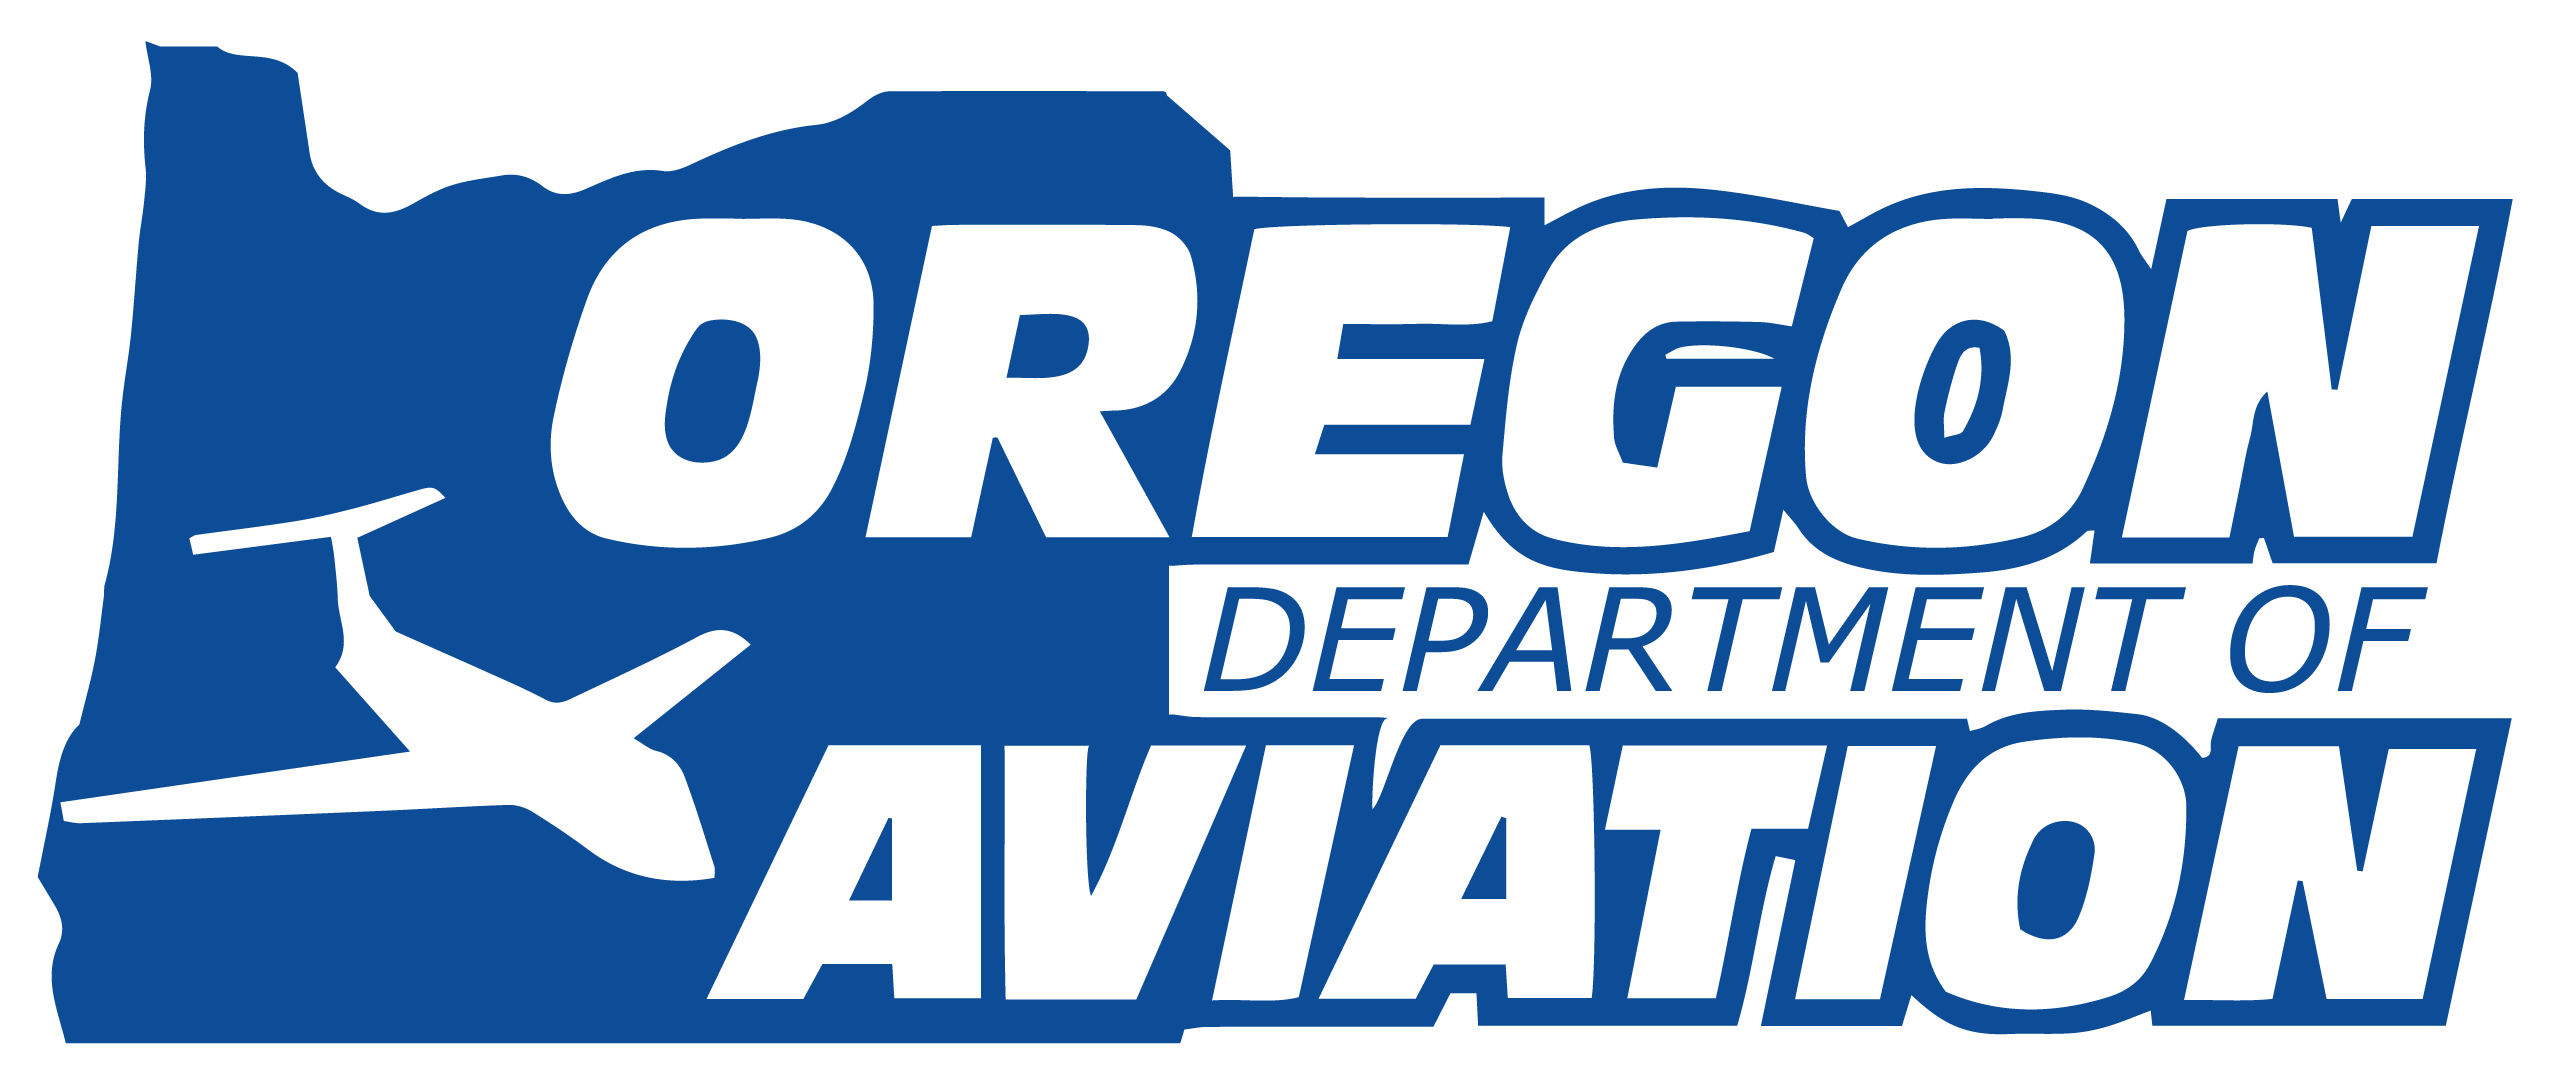 Oregon Department of Aviation